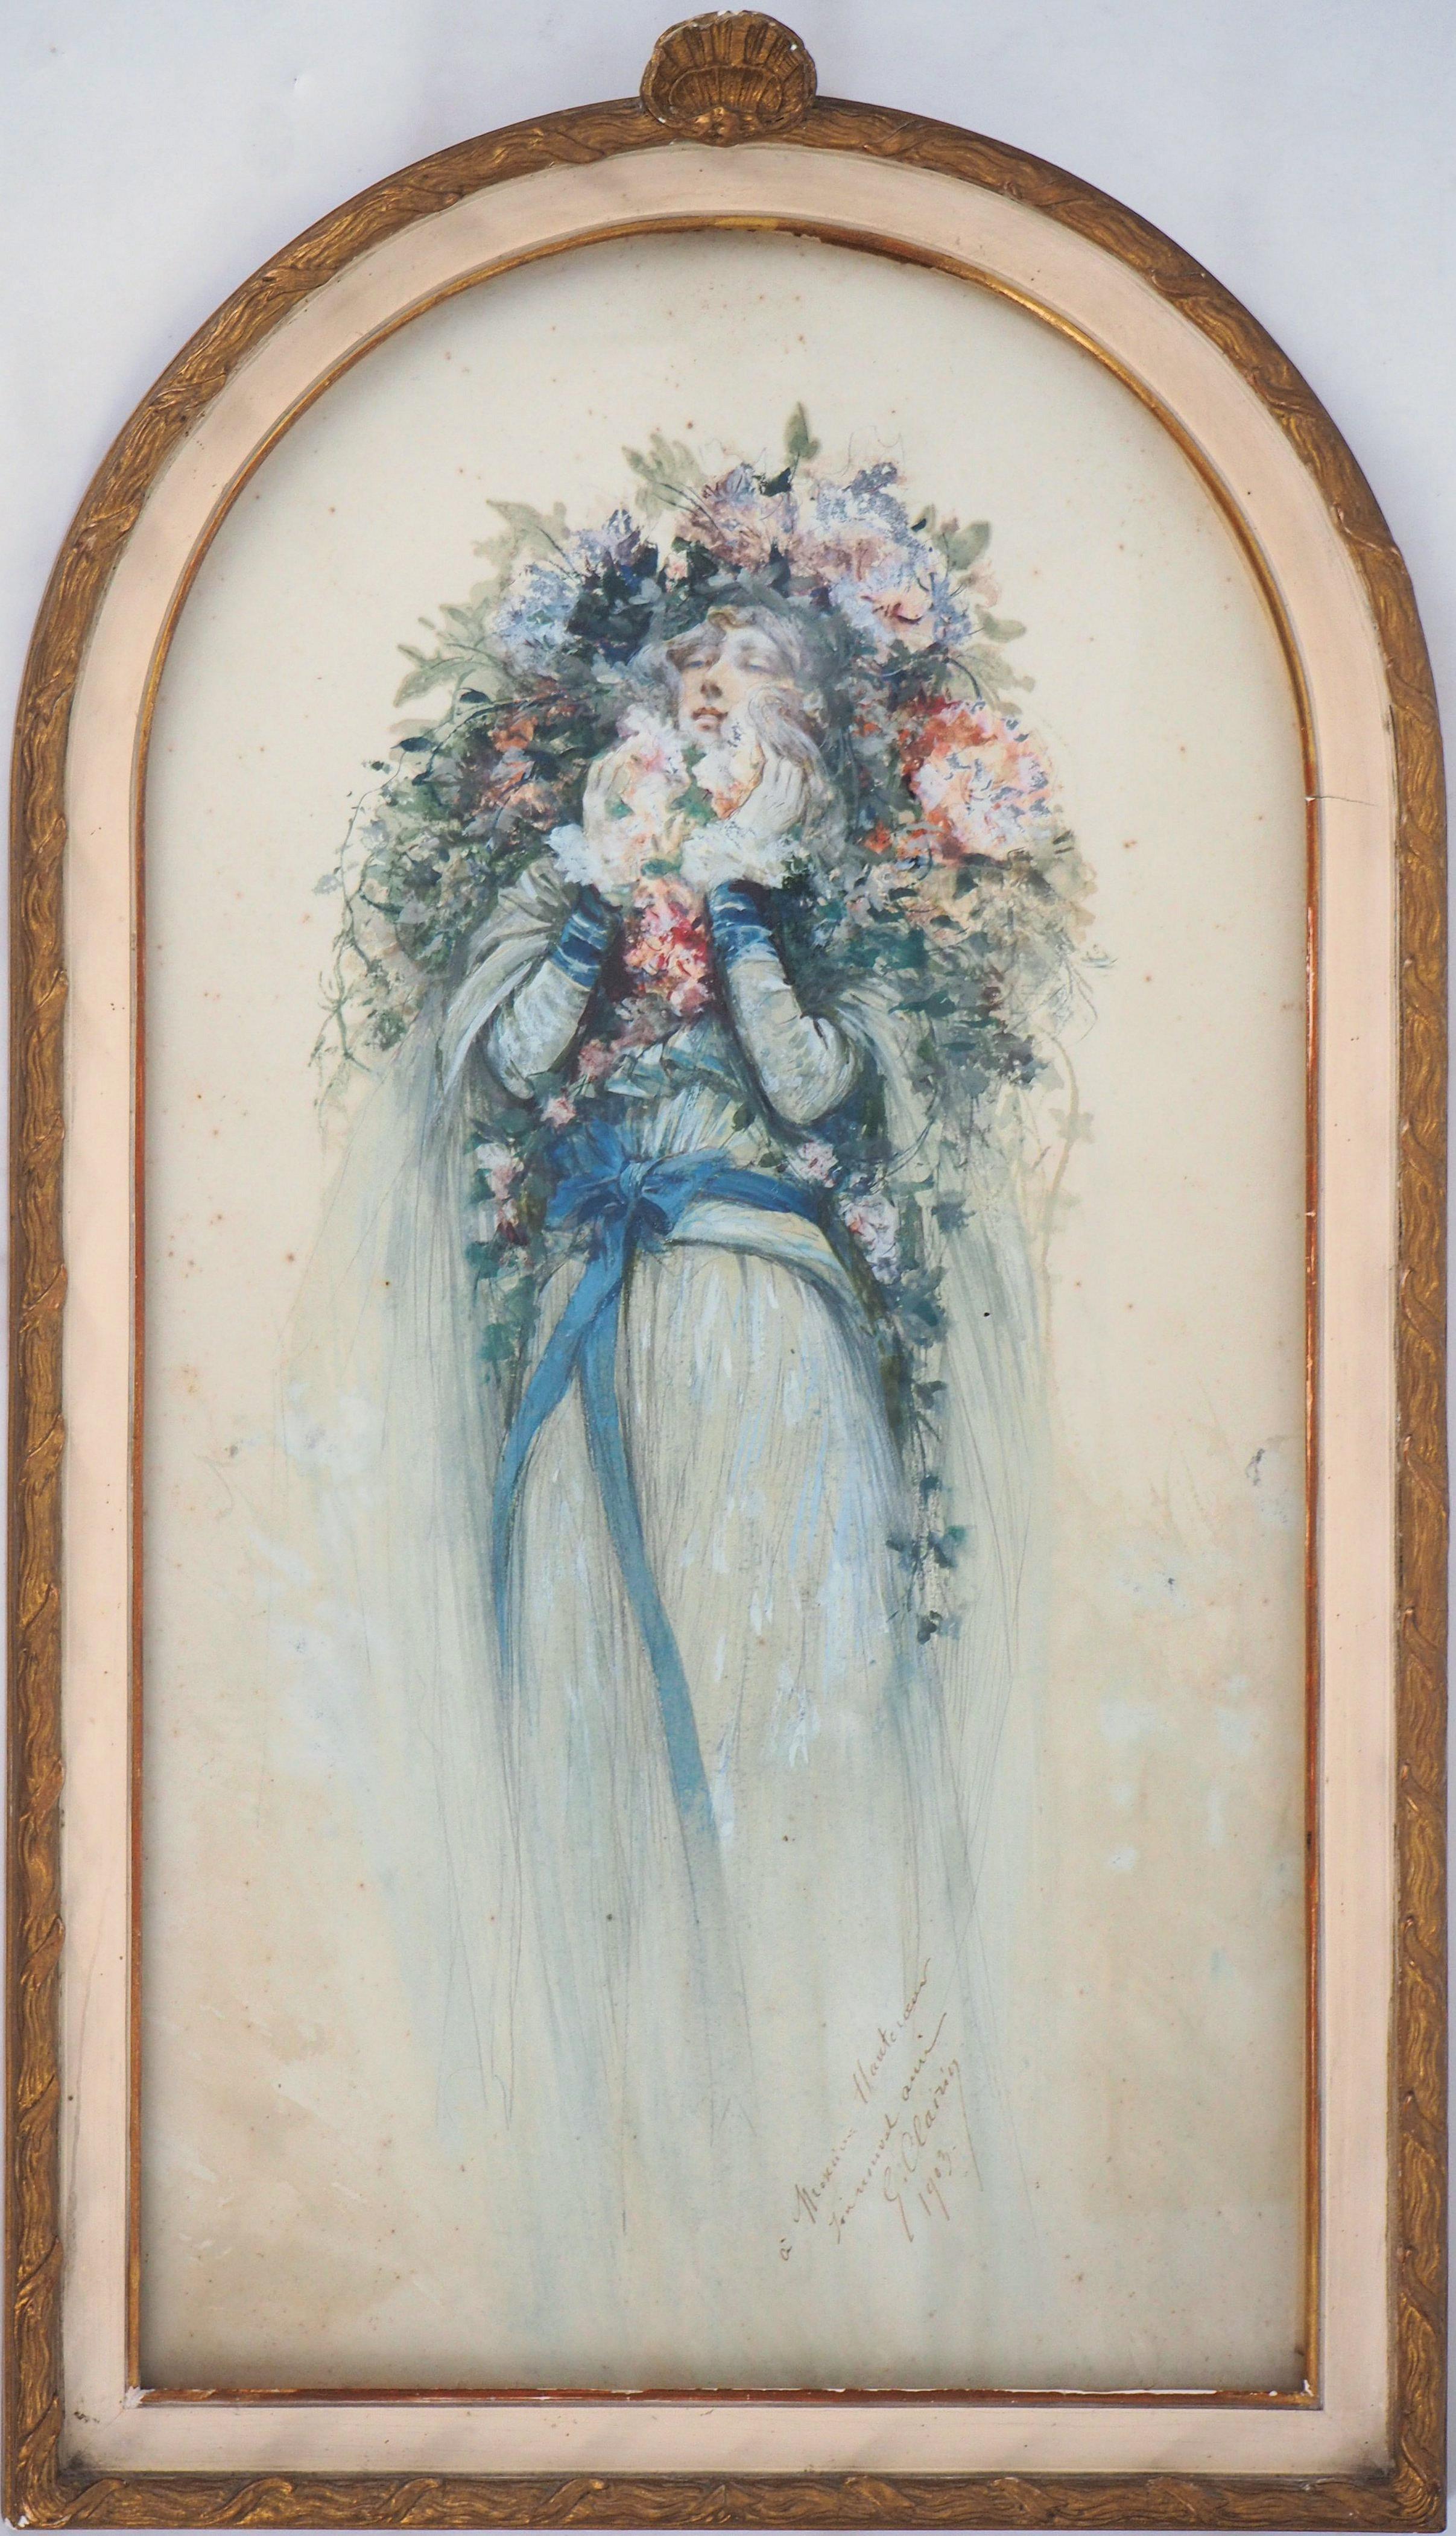 Theater : Sarah Bernhardt with Flowers - Original Watercolor, Handsigned